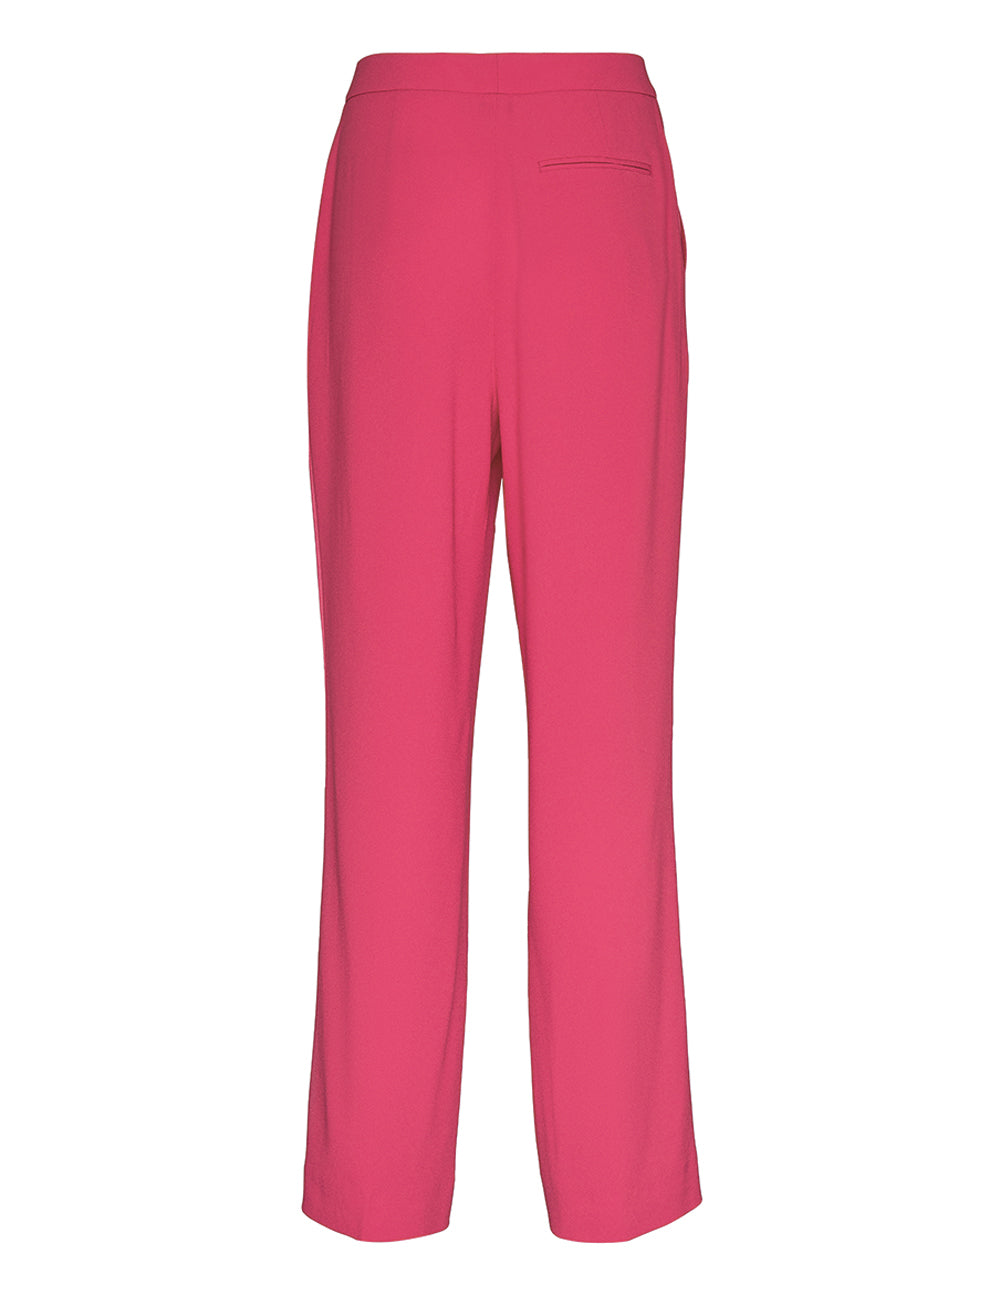 Club21 Collection Satin Back Crepe Pants (Pink)